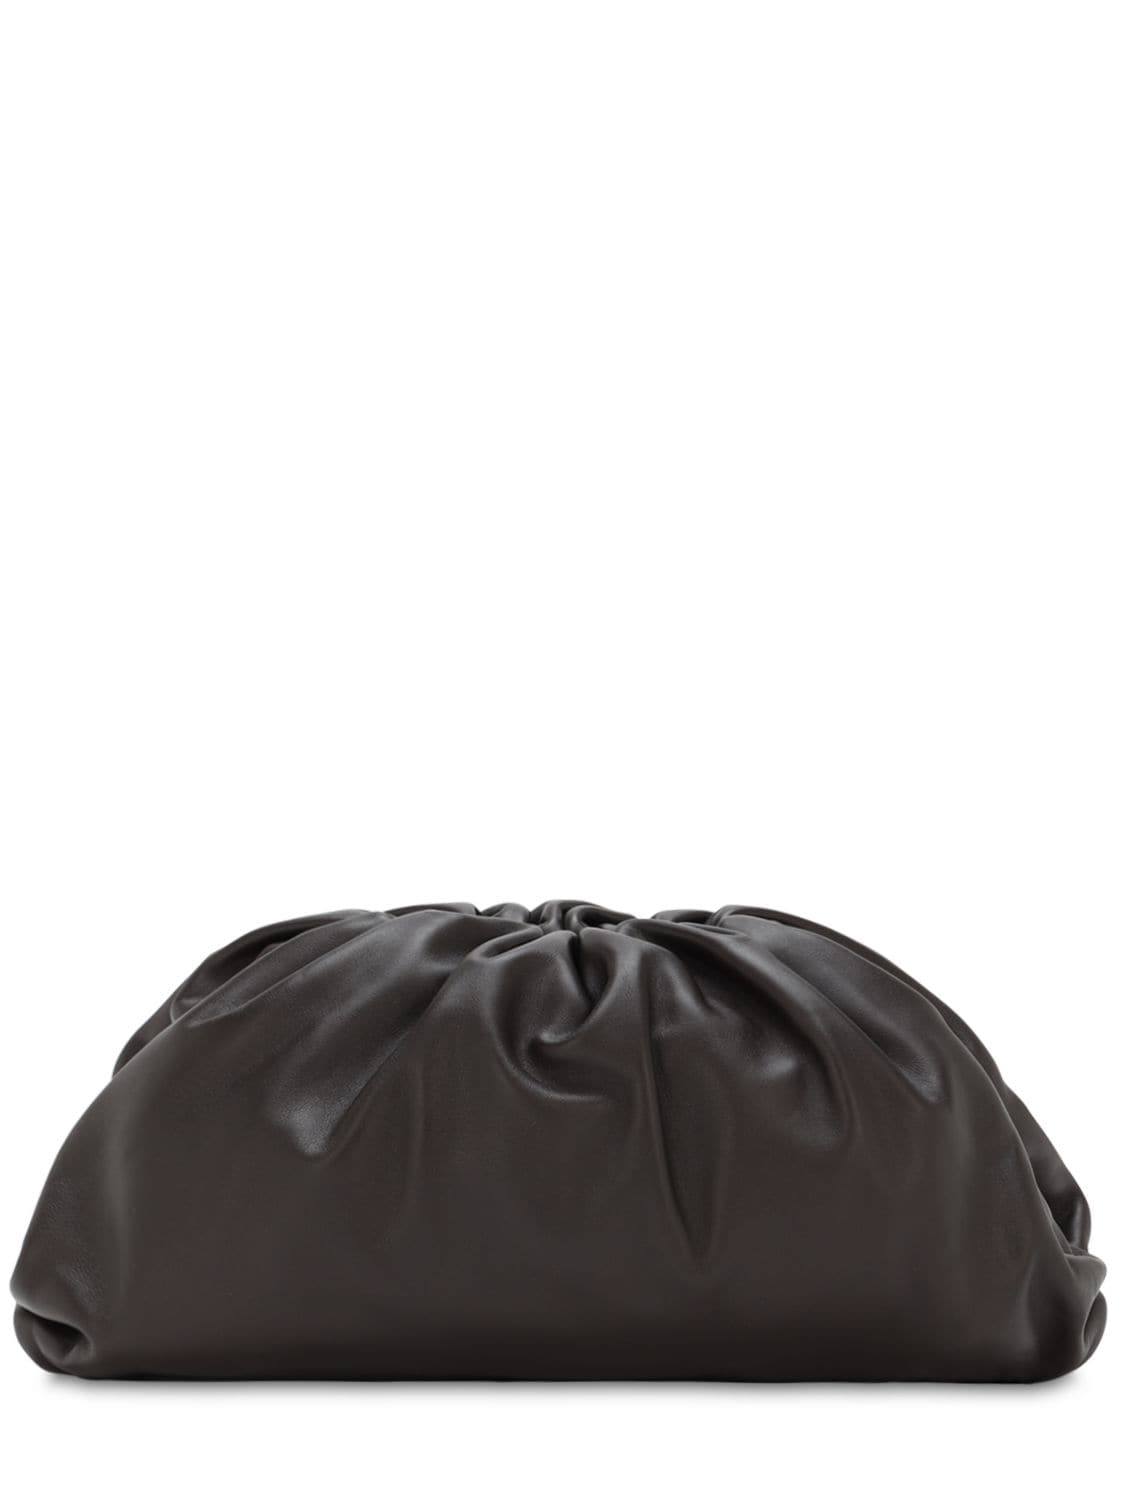 Bottega Veneta The Pouch Smooth Leather Bag In Fondente